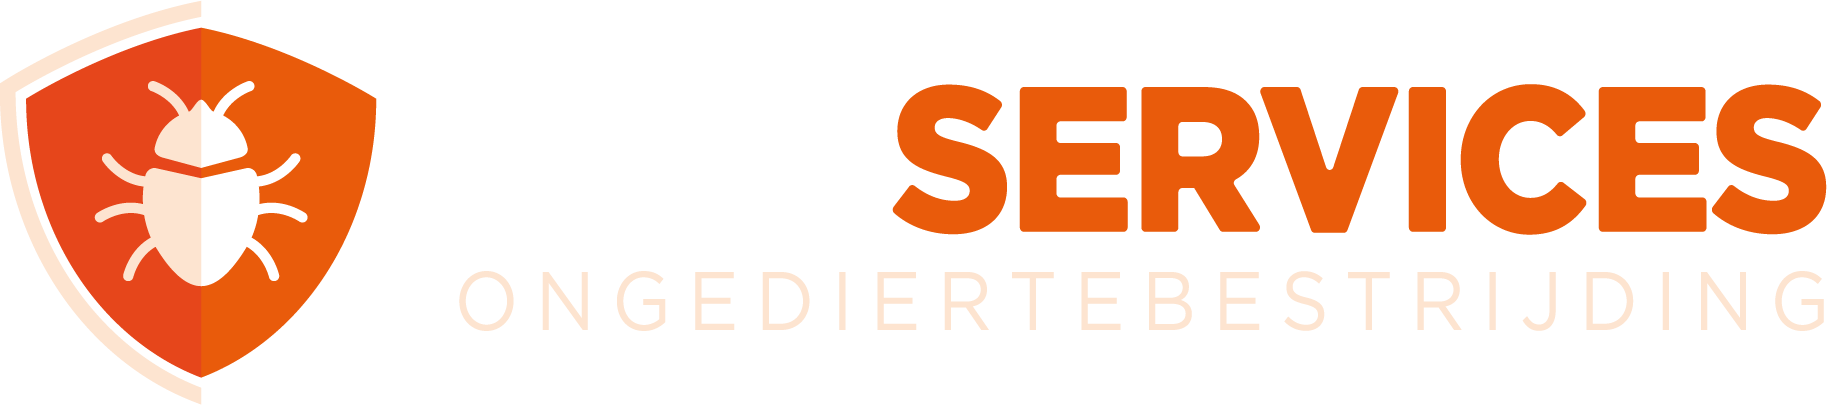 3 witte letters die samen OFS vormen en 7 oranje letters die samen SERVICES vormen.